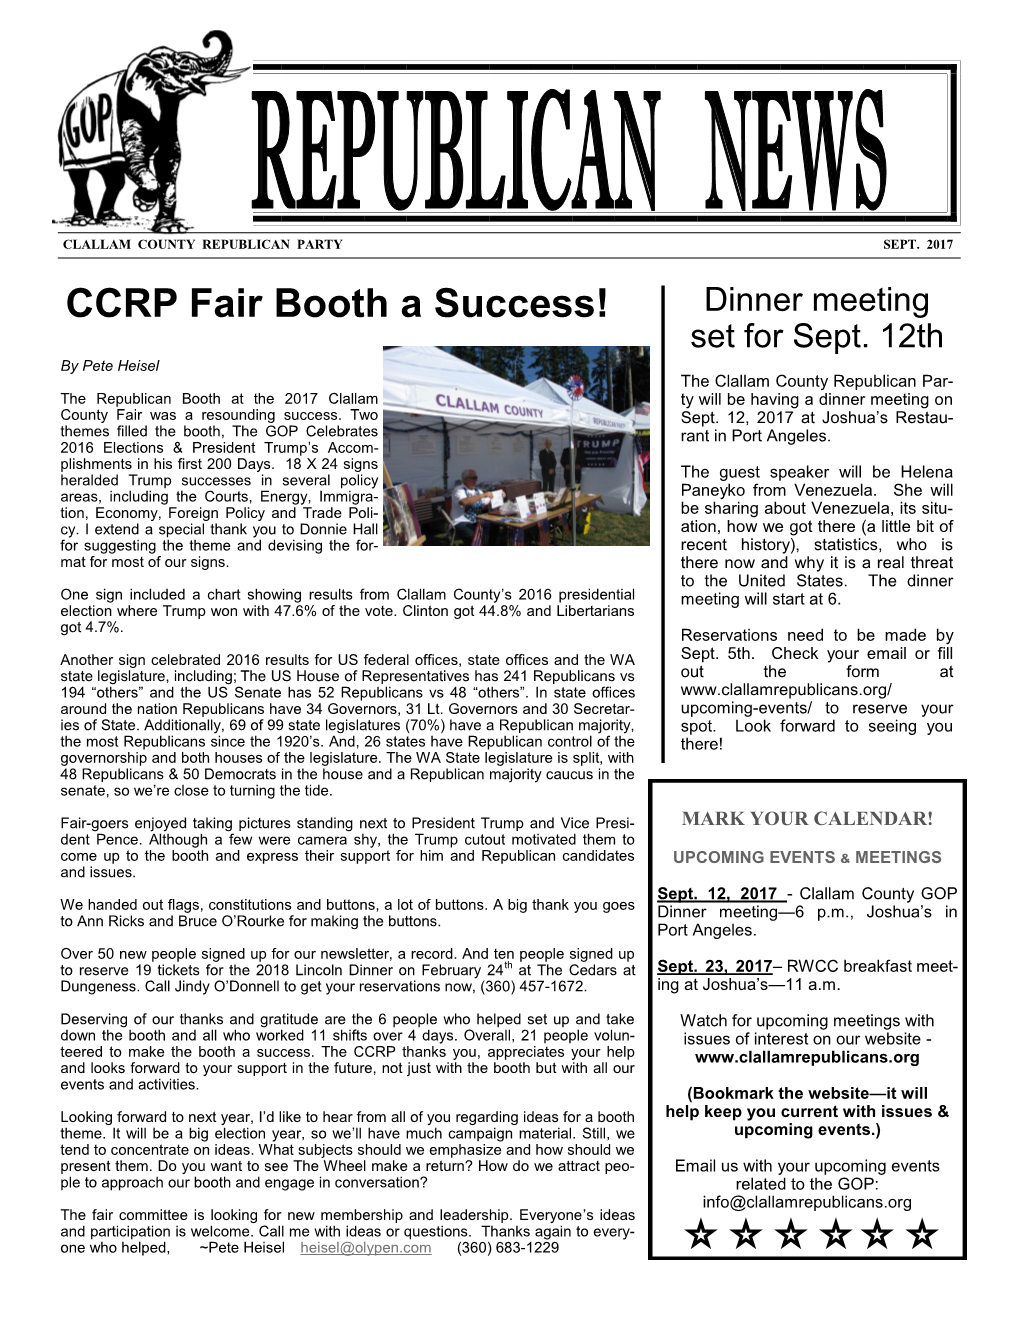 CCRP Fair Booth a Success! Dinner Meeting Set for Sept